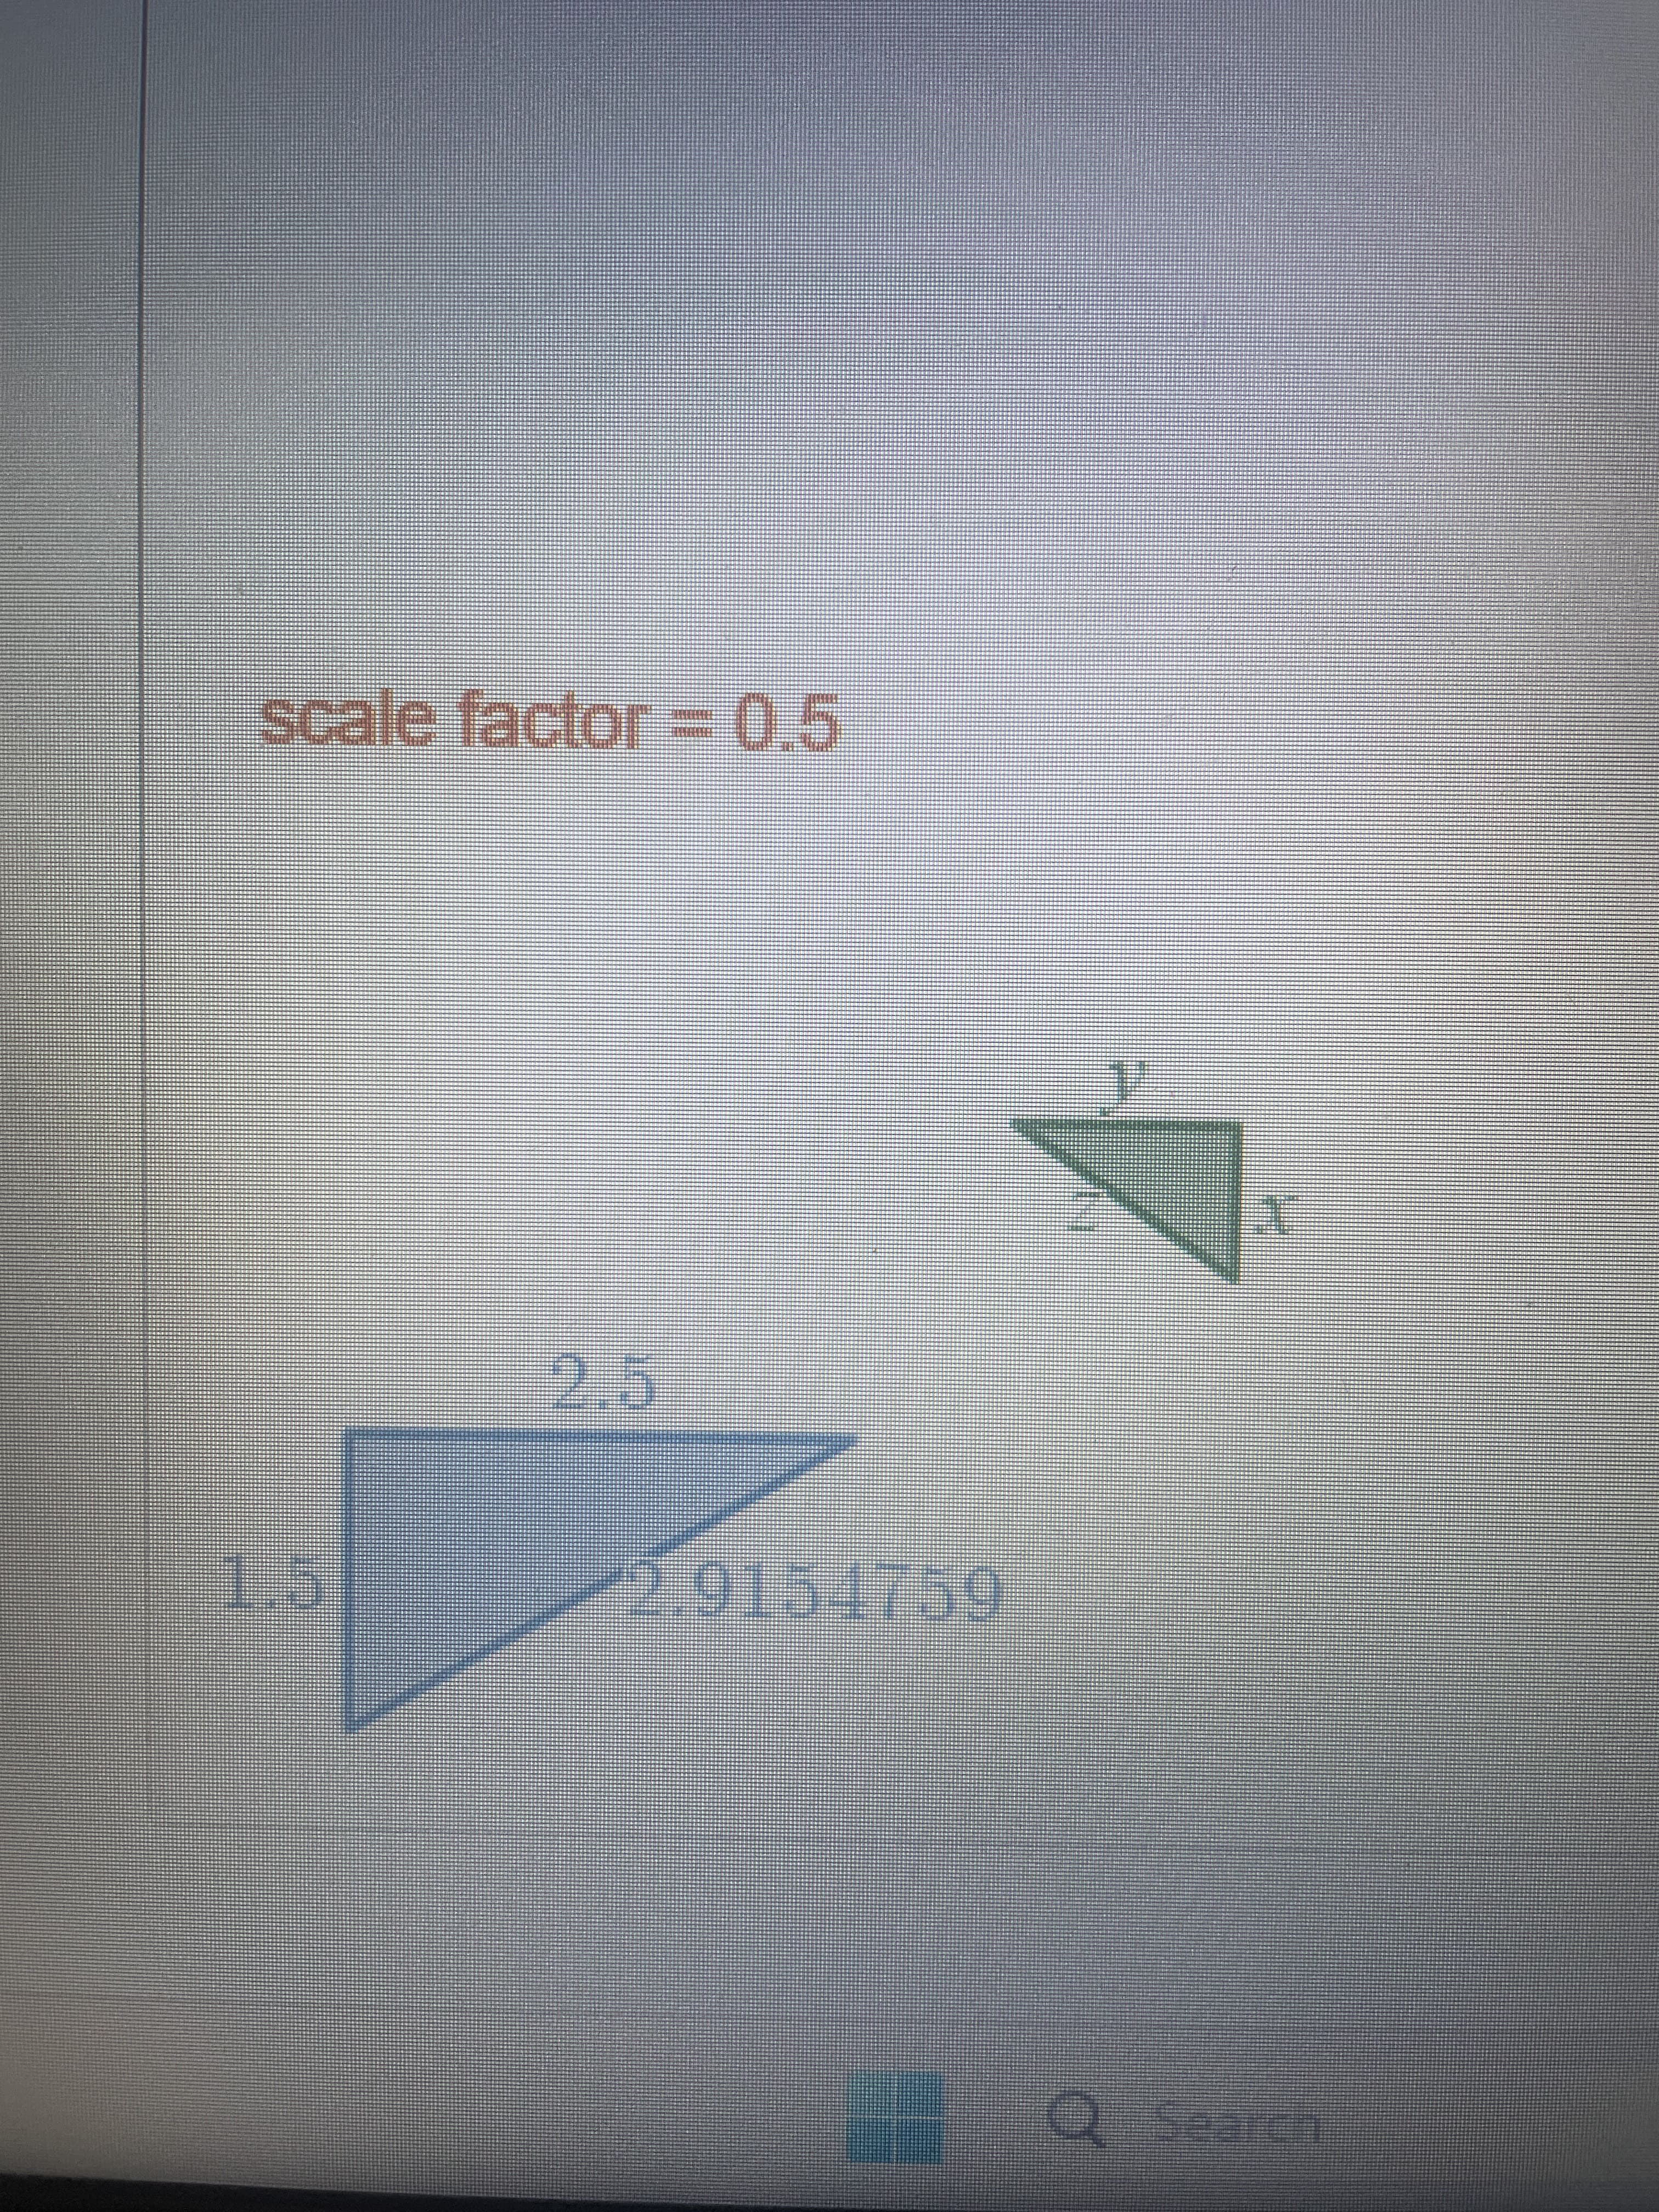 scale factor = 0.5
1.5
2.5
2.9154759
Q Search